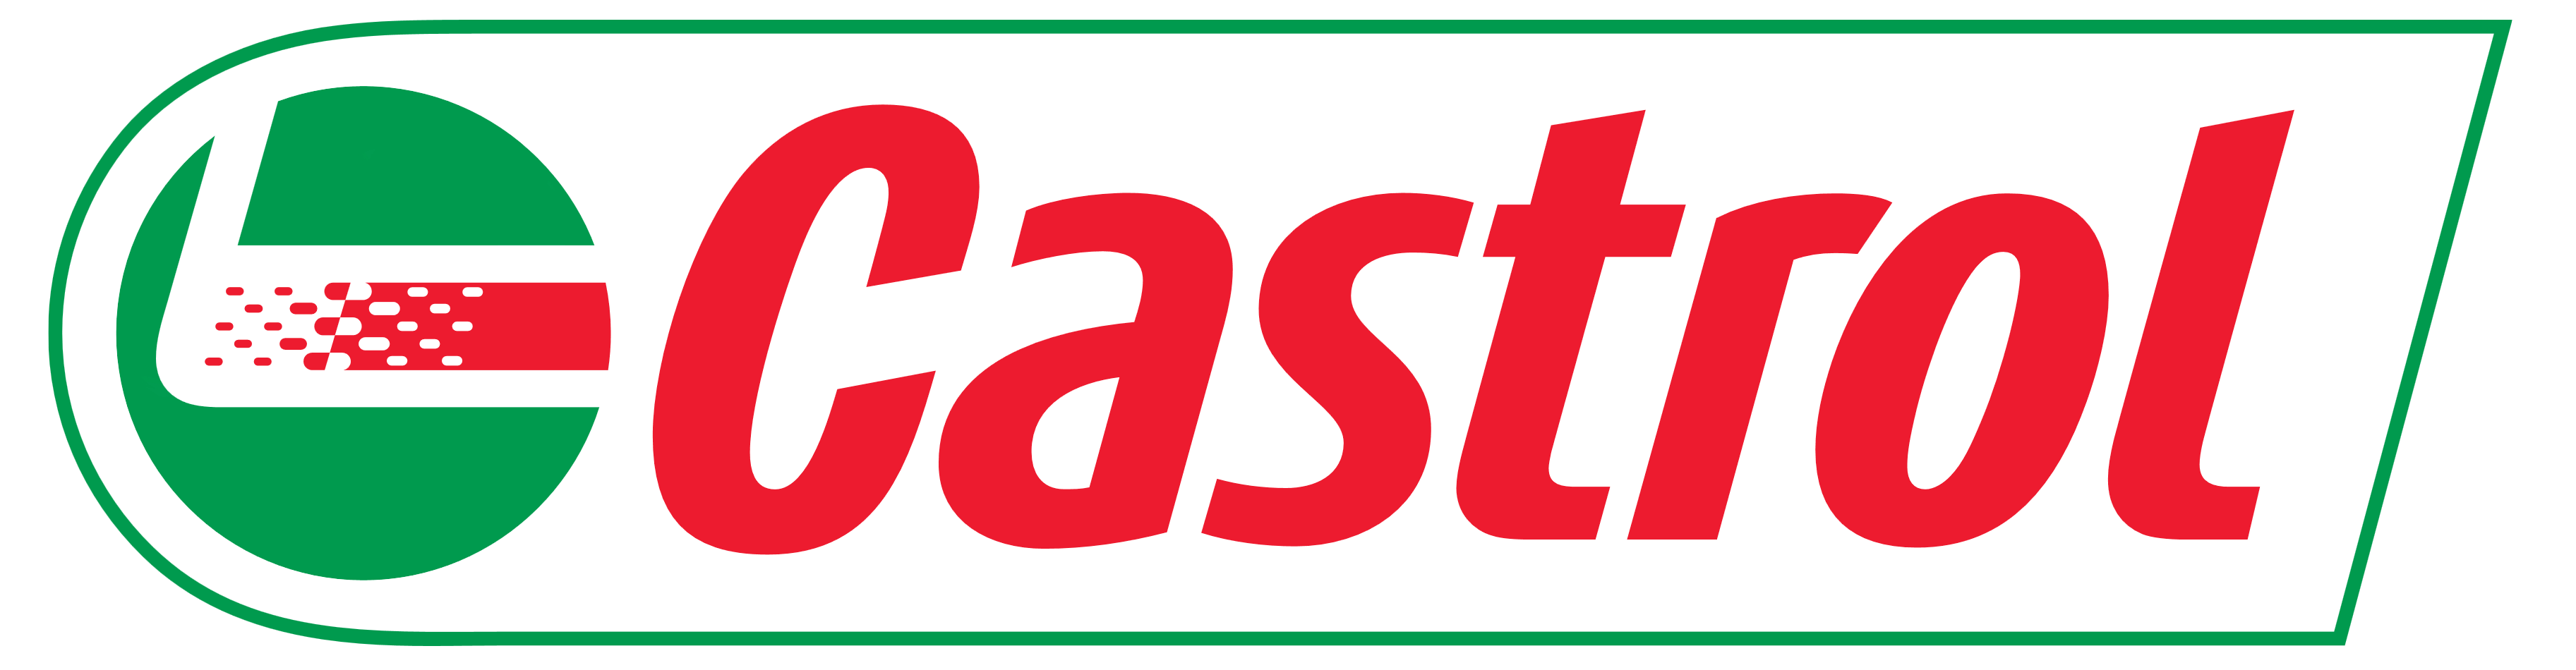 Castrol logo, logotype